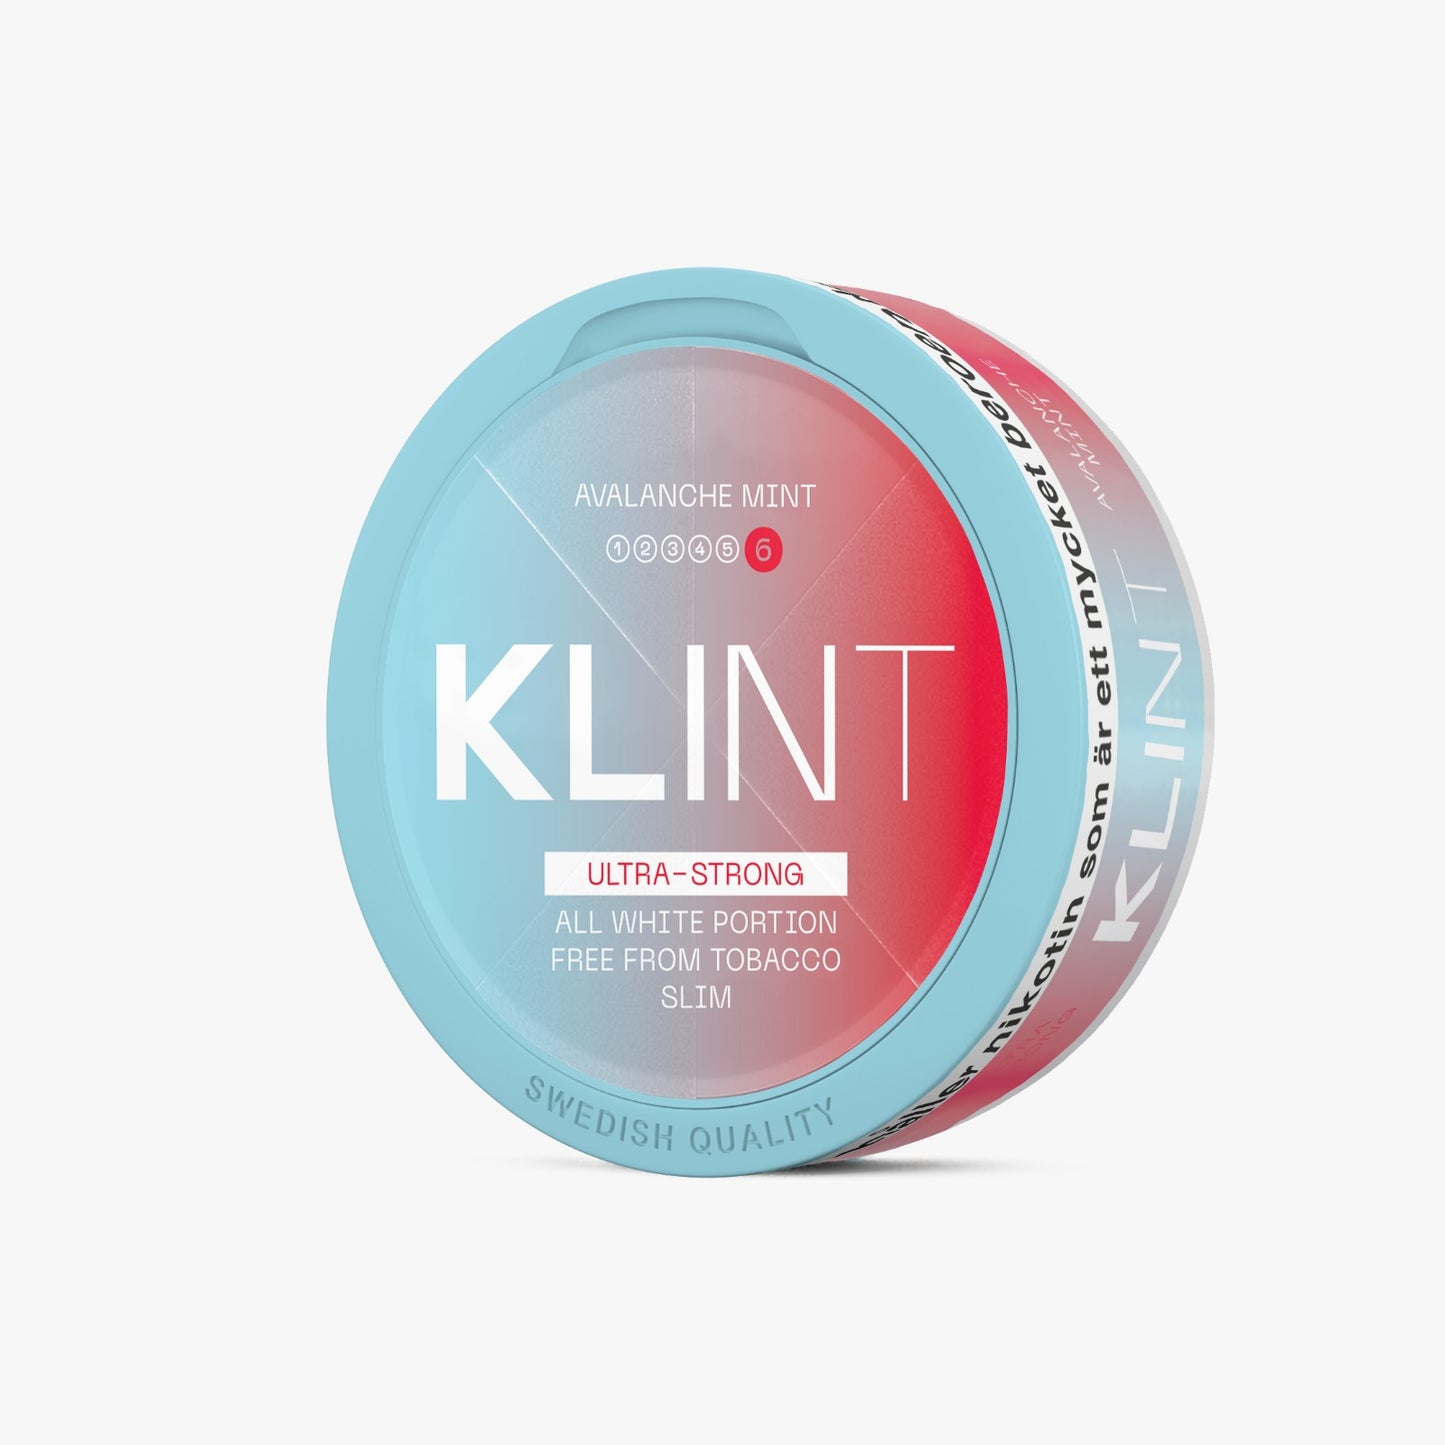 Klint Avalanche Mint nicotine pouches 25mg/g